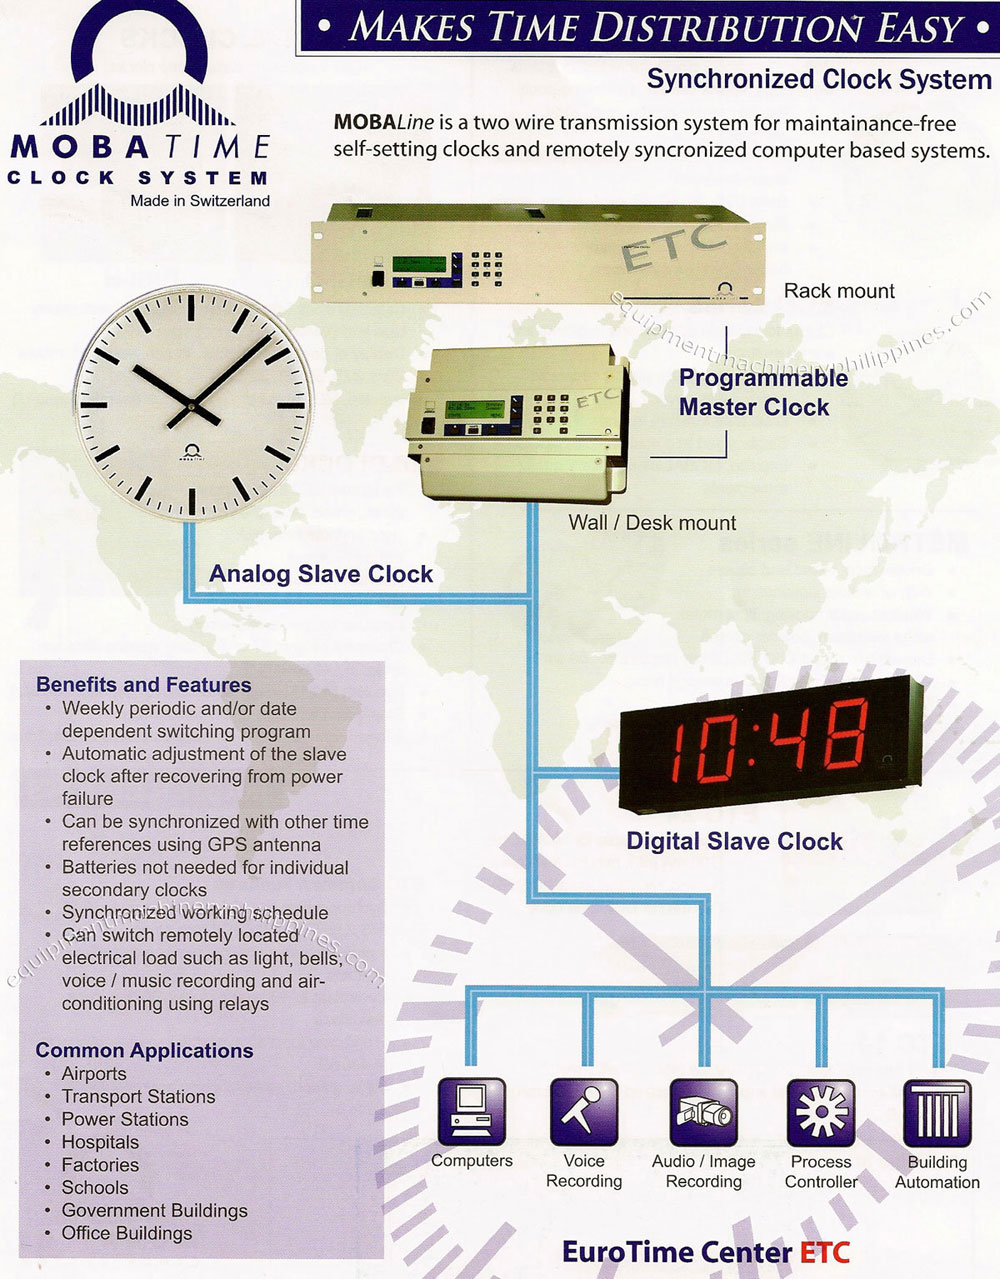 Mobatime Synchronized Clock System